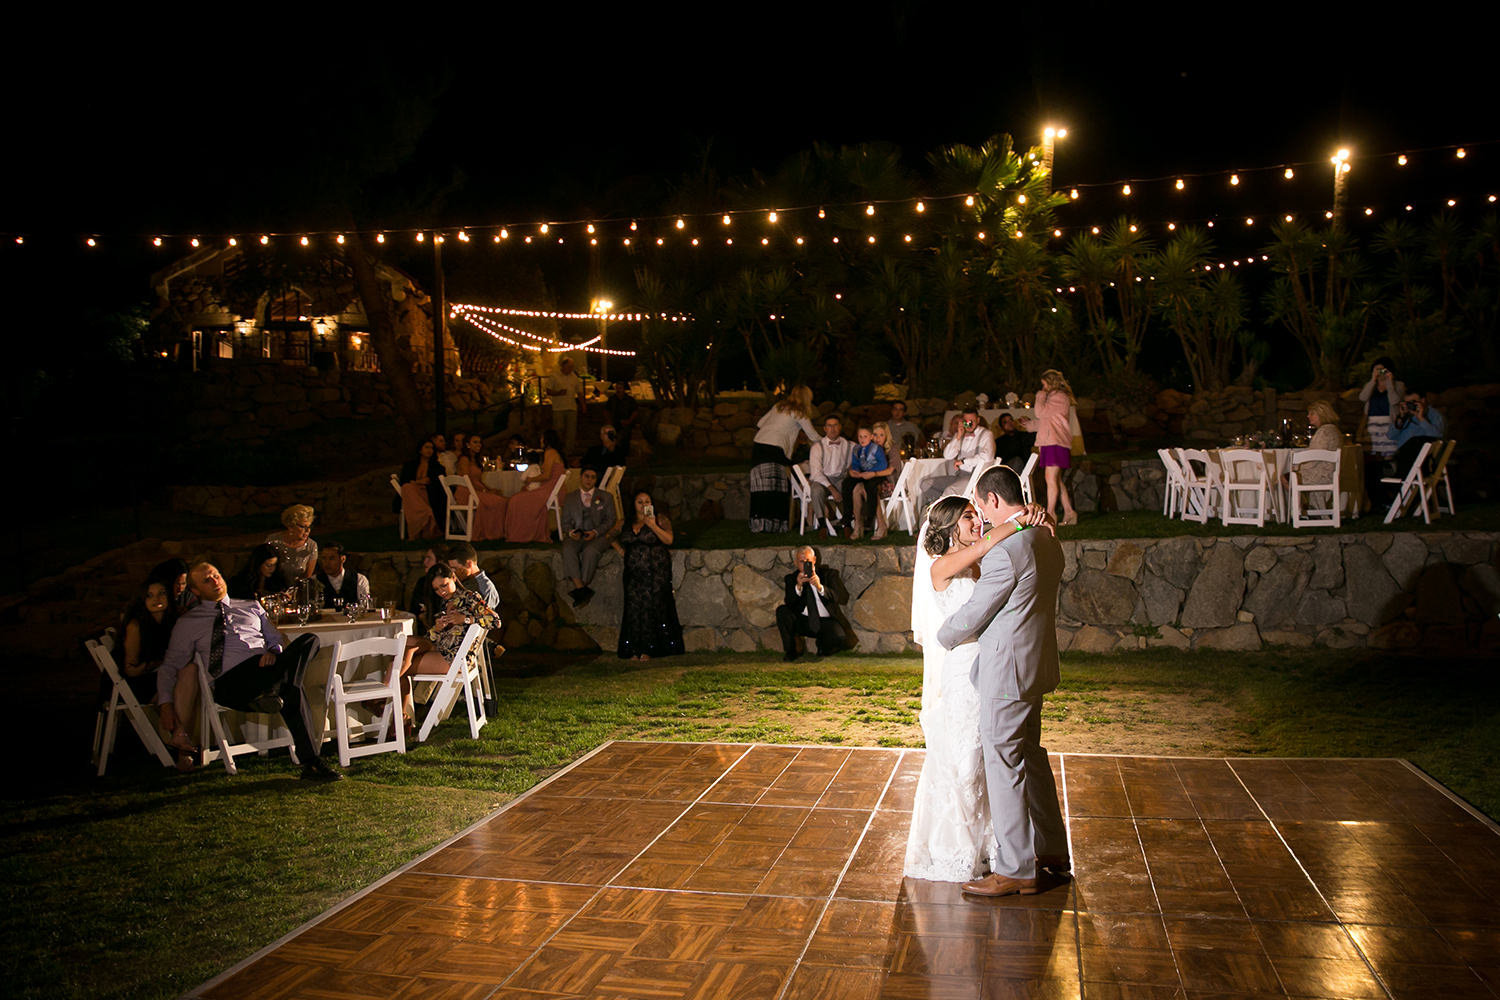 nightime reception image bride and groom dancing